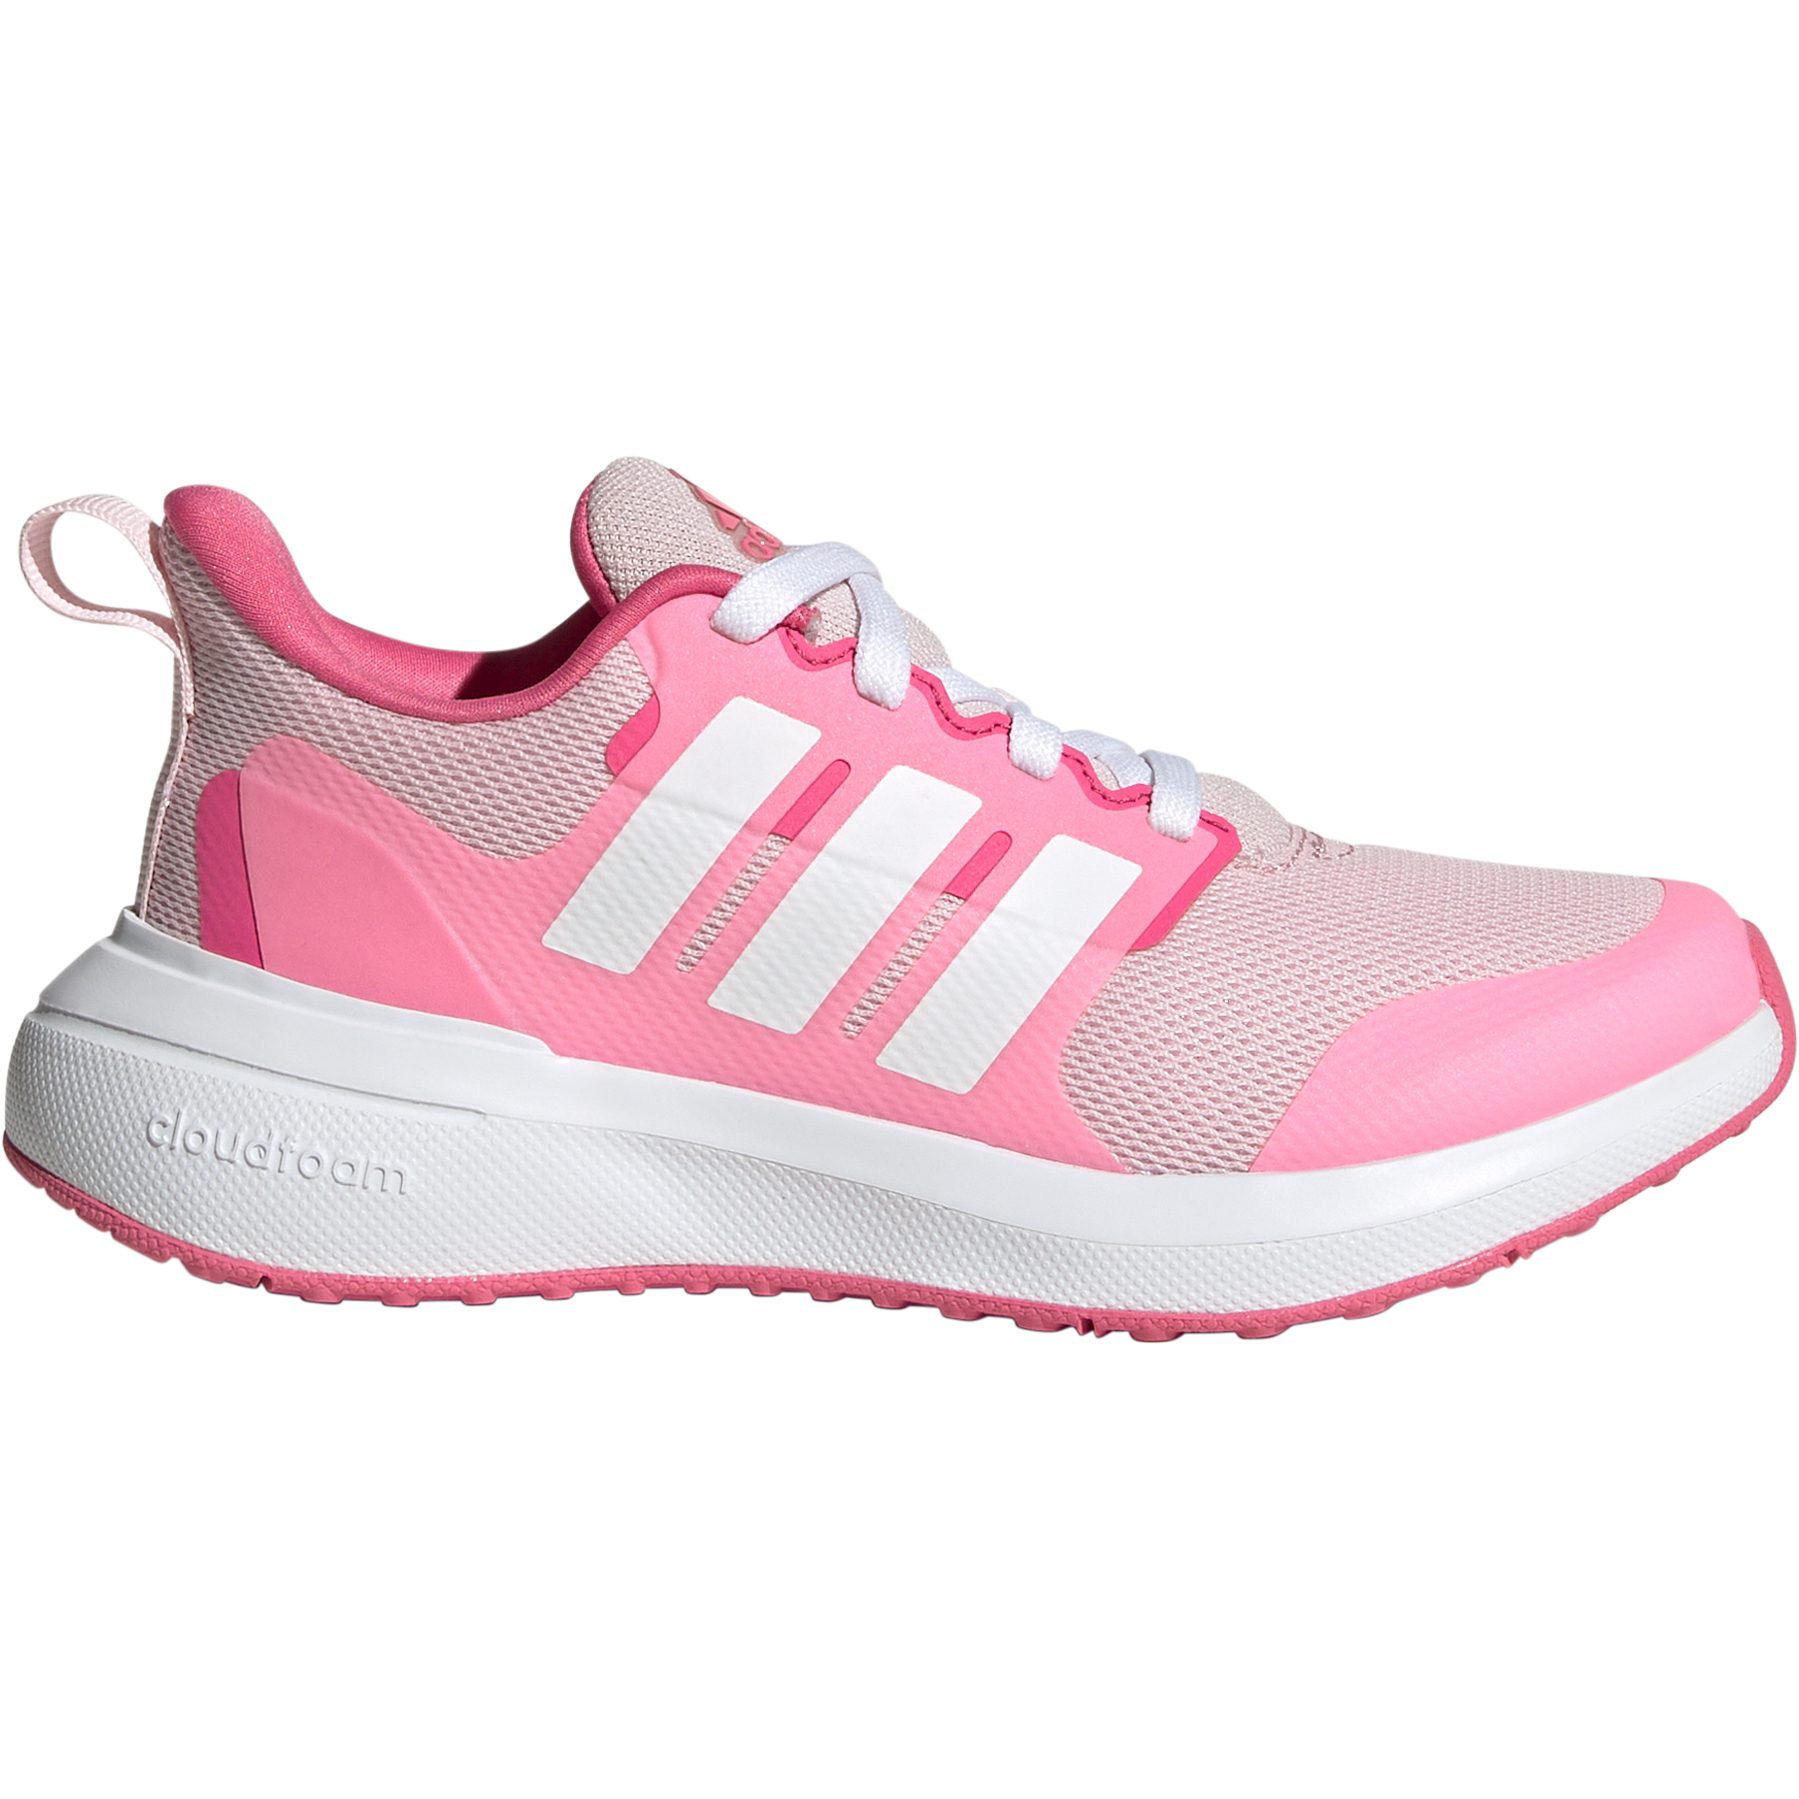 Beïnvloeden Economie servet adidas - FortaRun 2.0 Cloudfoam Sneaker Kids clear pink at Sport Bittl Shop